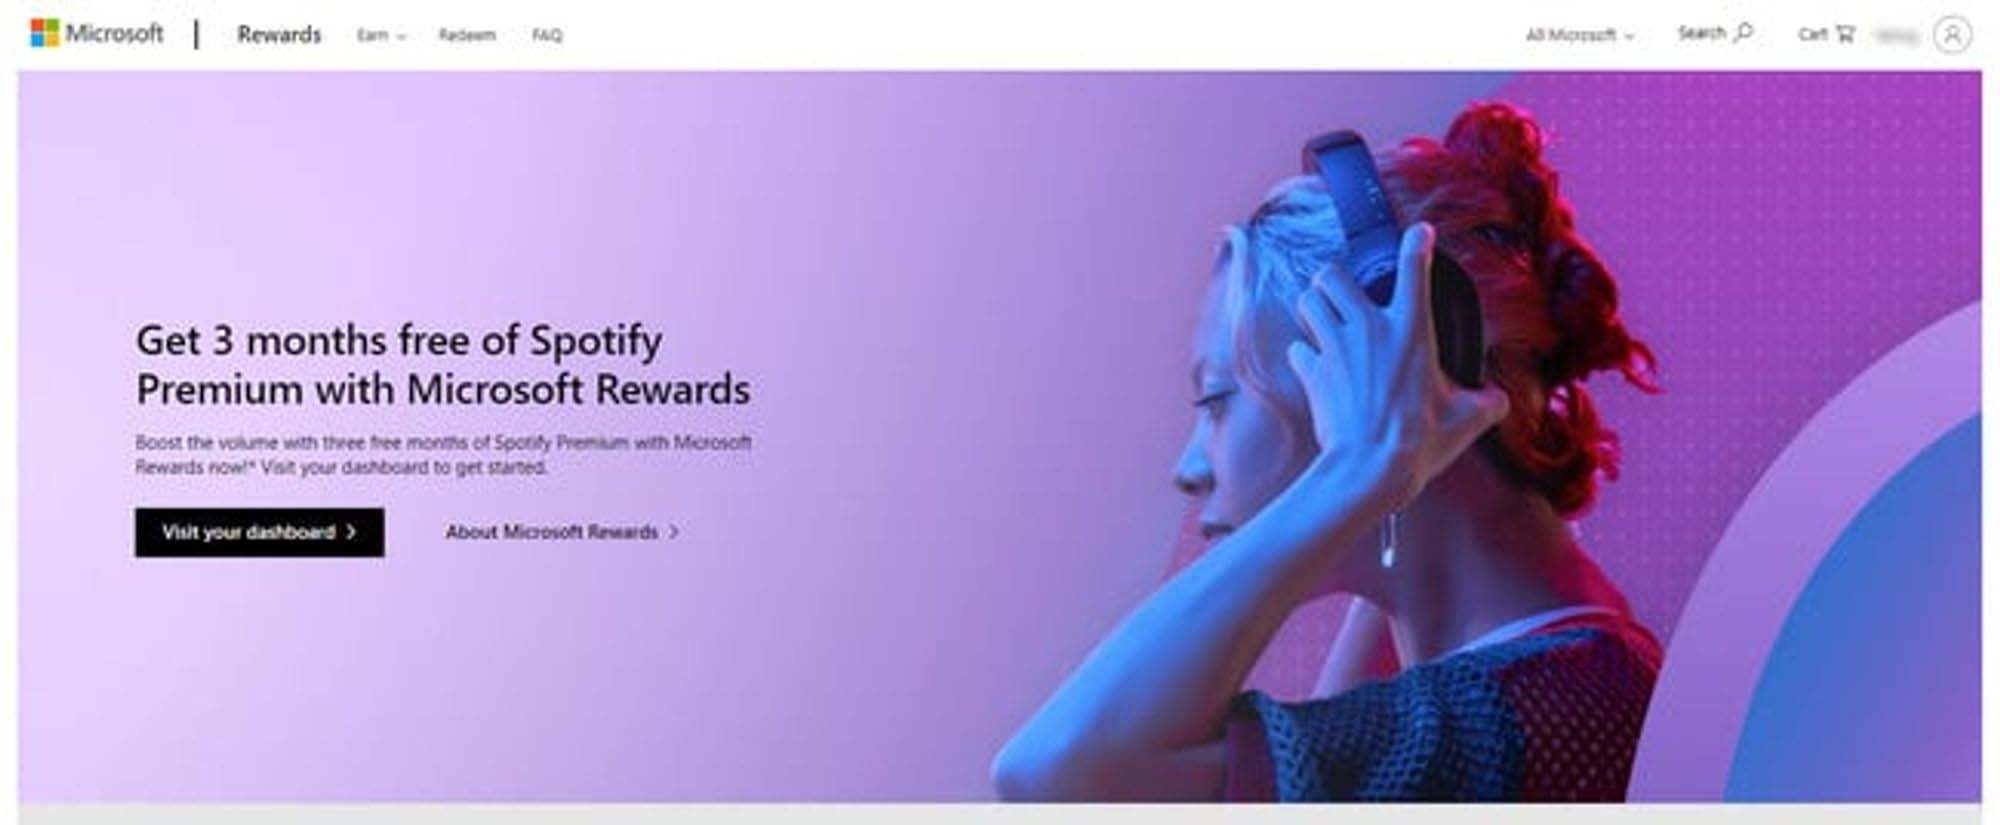 get spotify premium via Microsoft